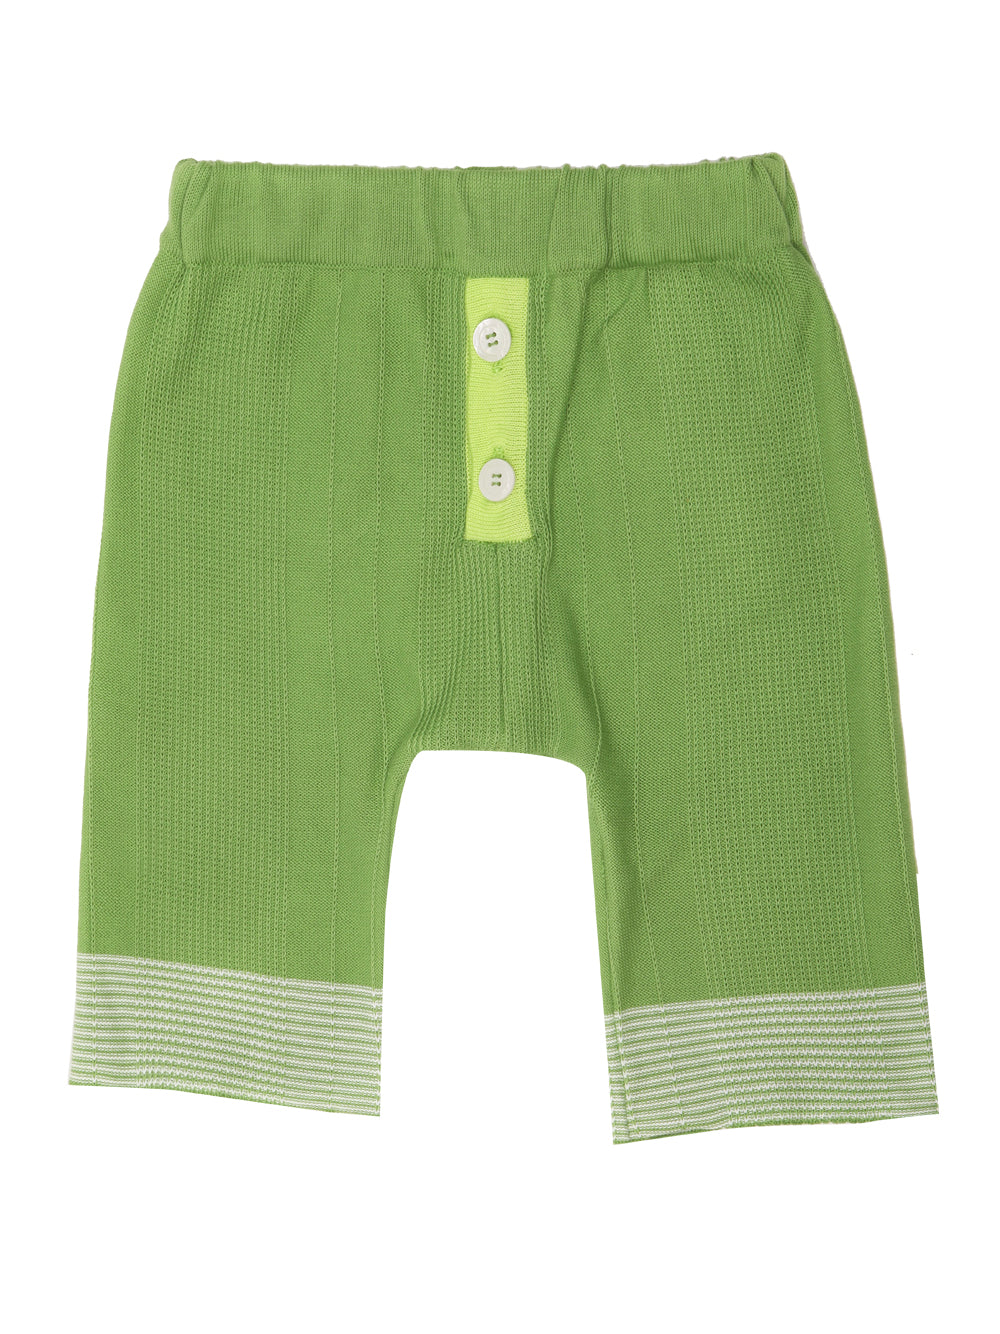 Vegan Green BIker Shorts